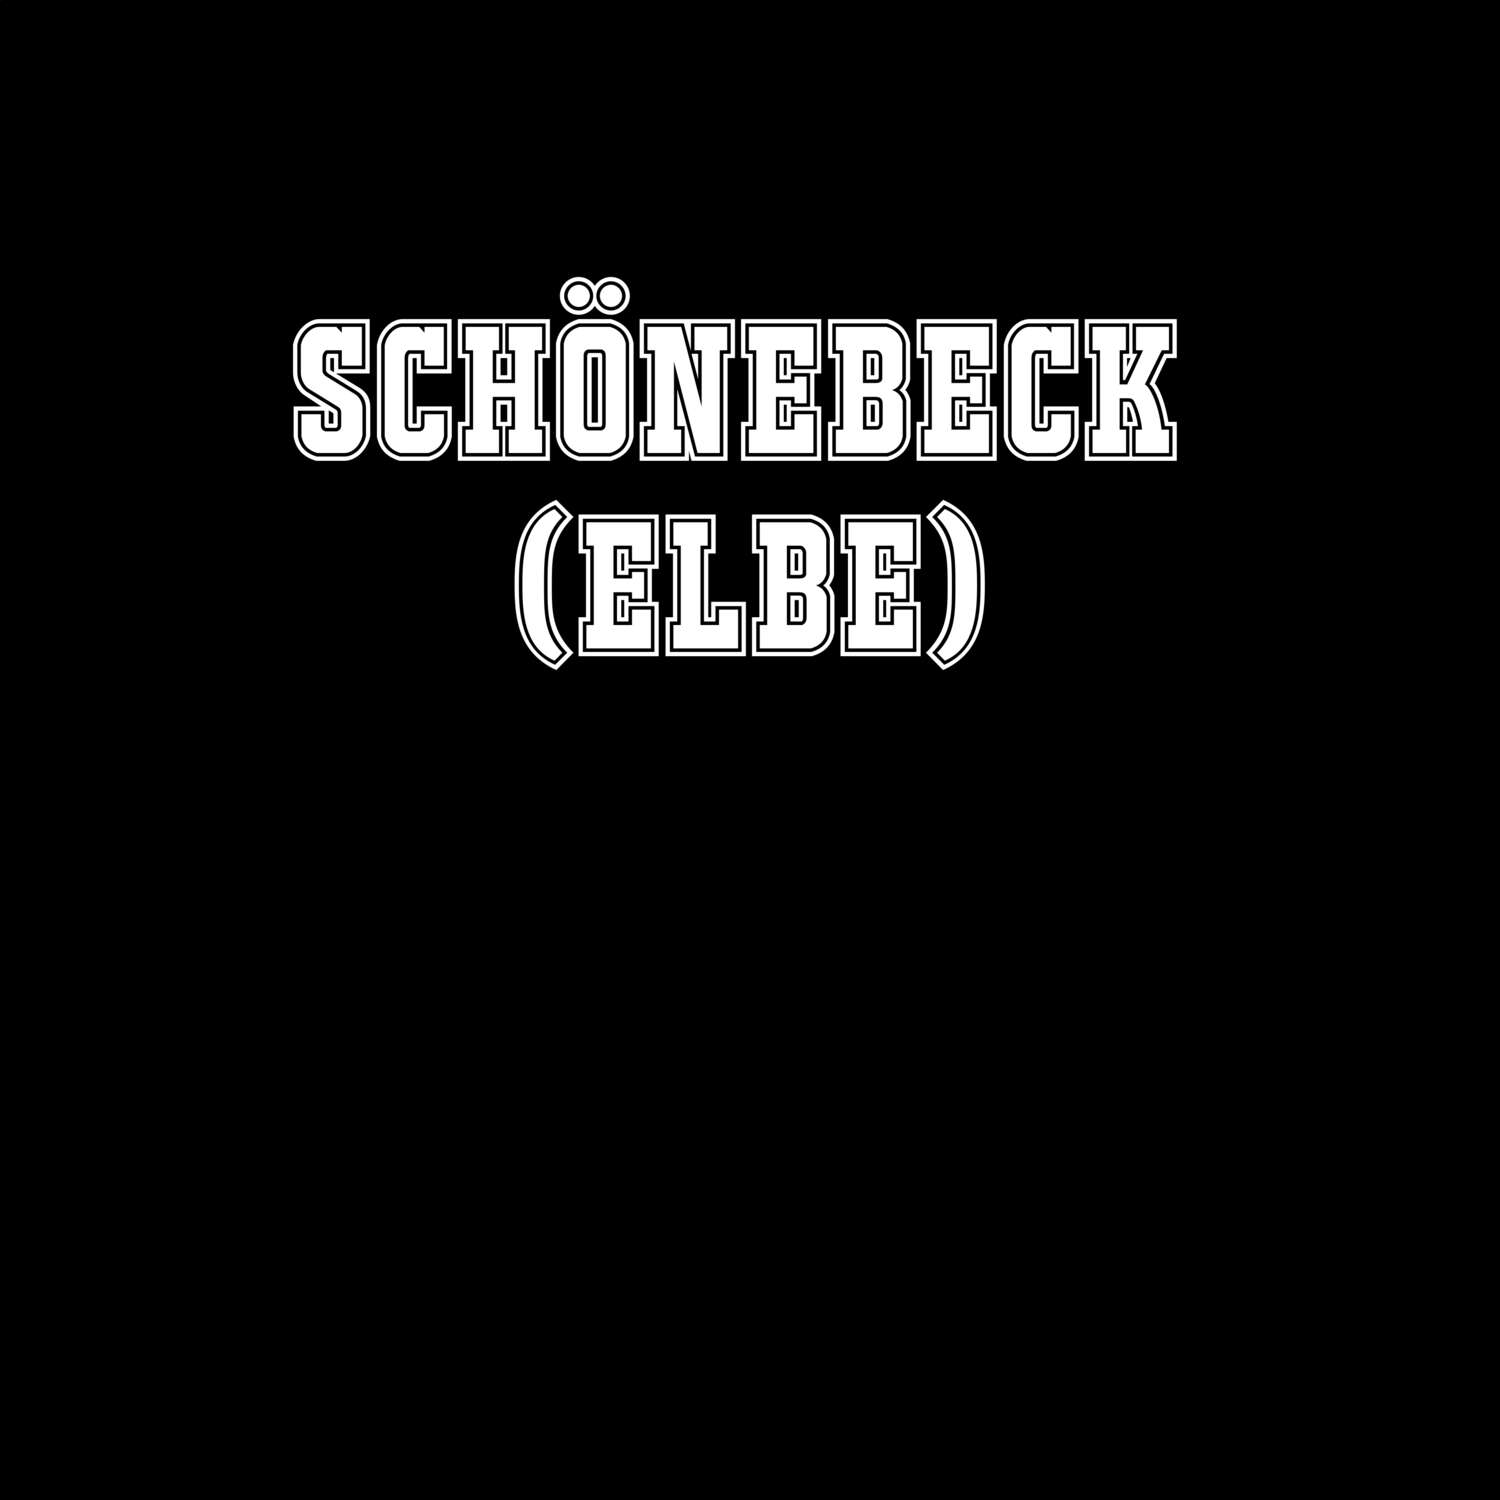 Schönebeck (Elbe) T-Shirt »Classic«